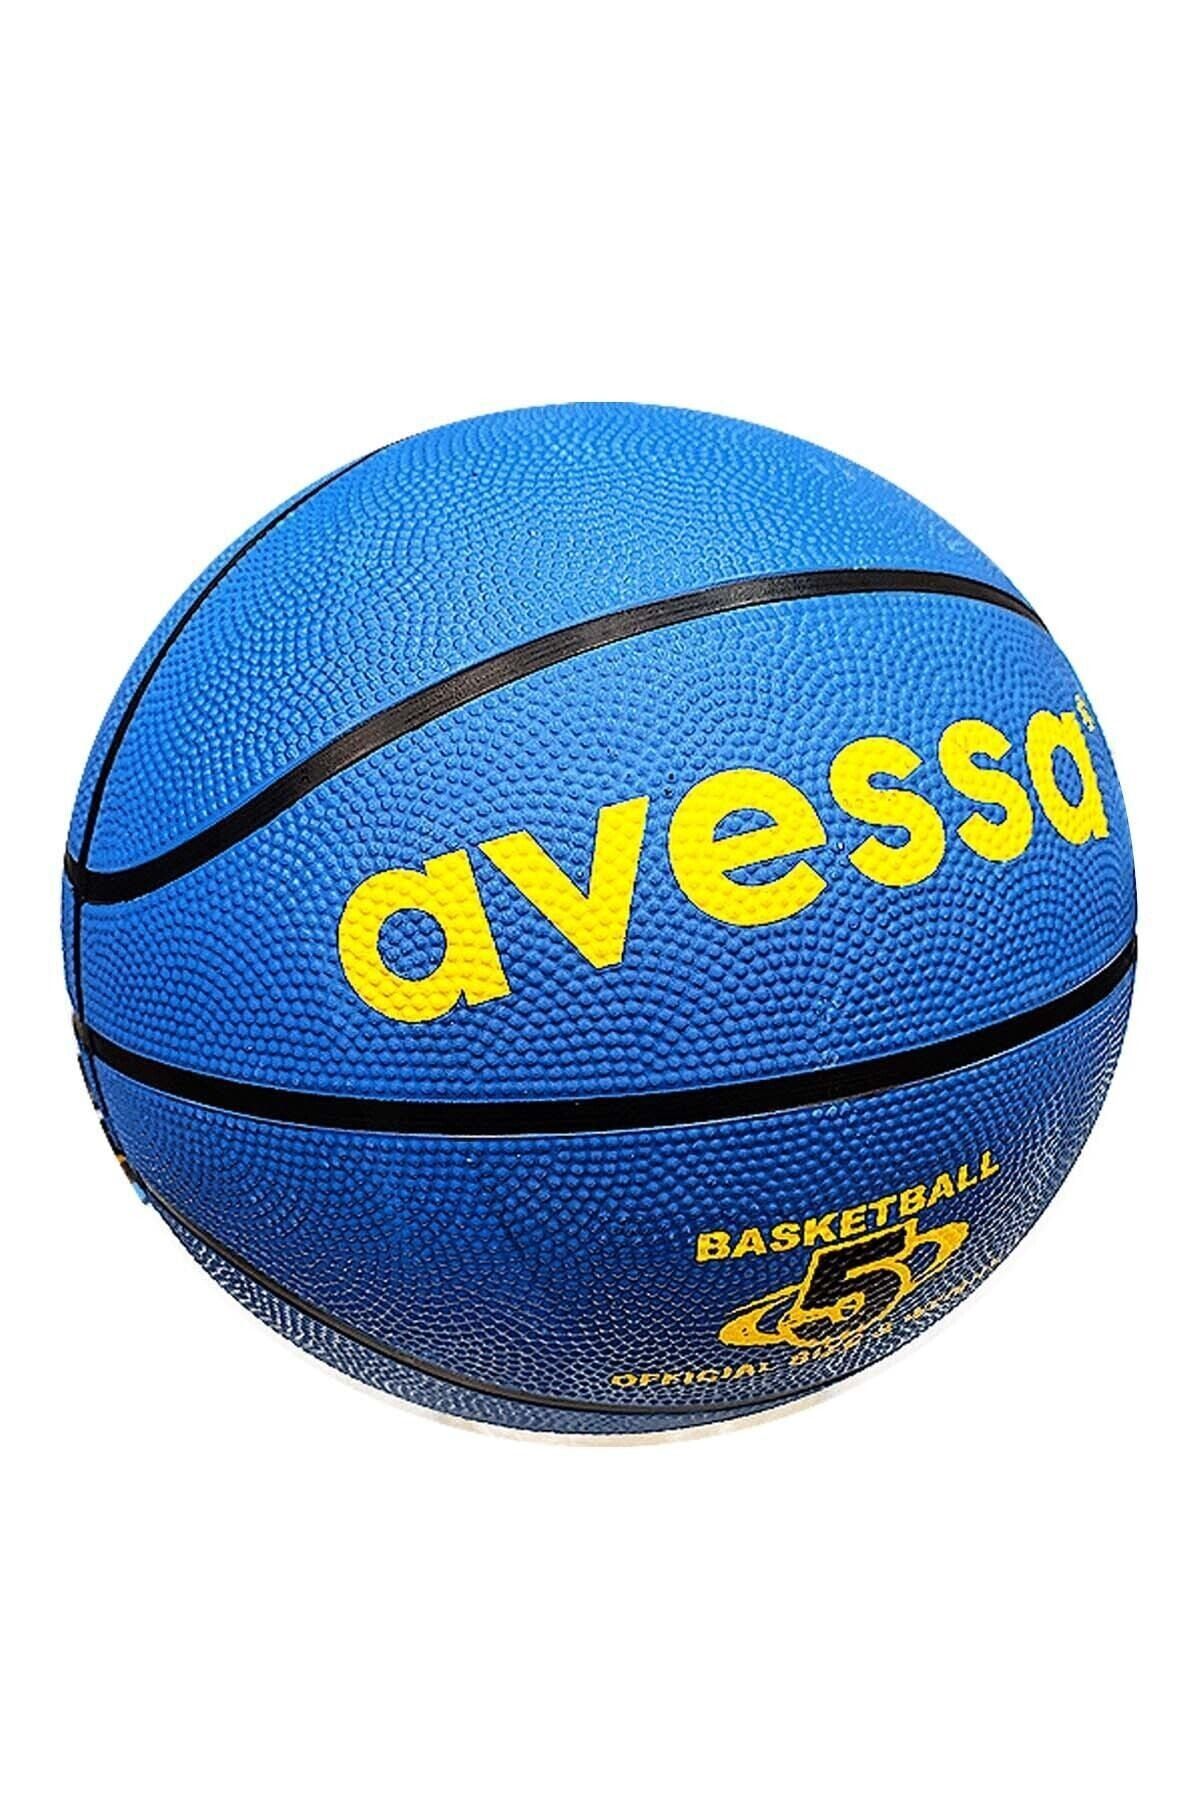 Avessa Basketbol Topu No 5 Mavi